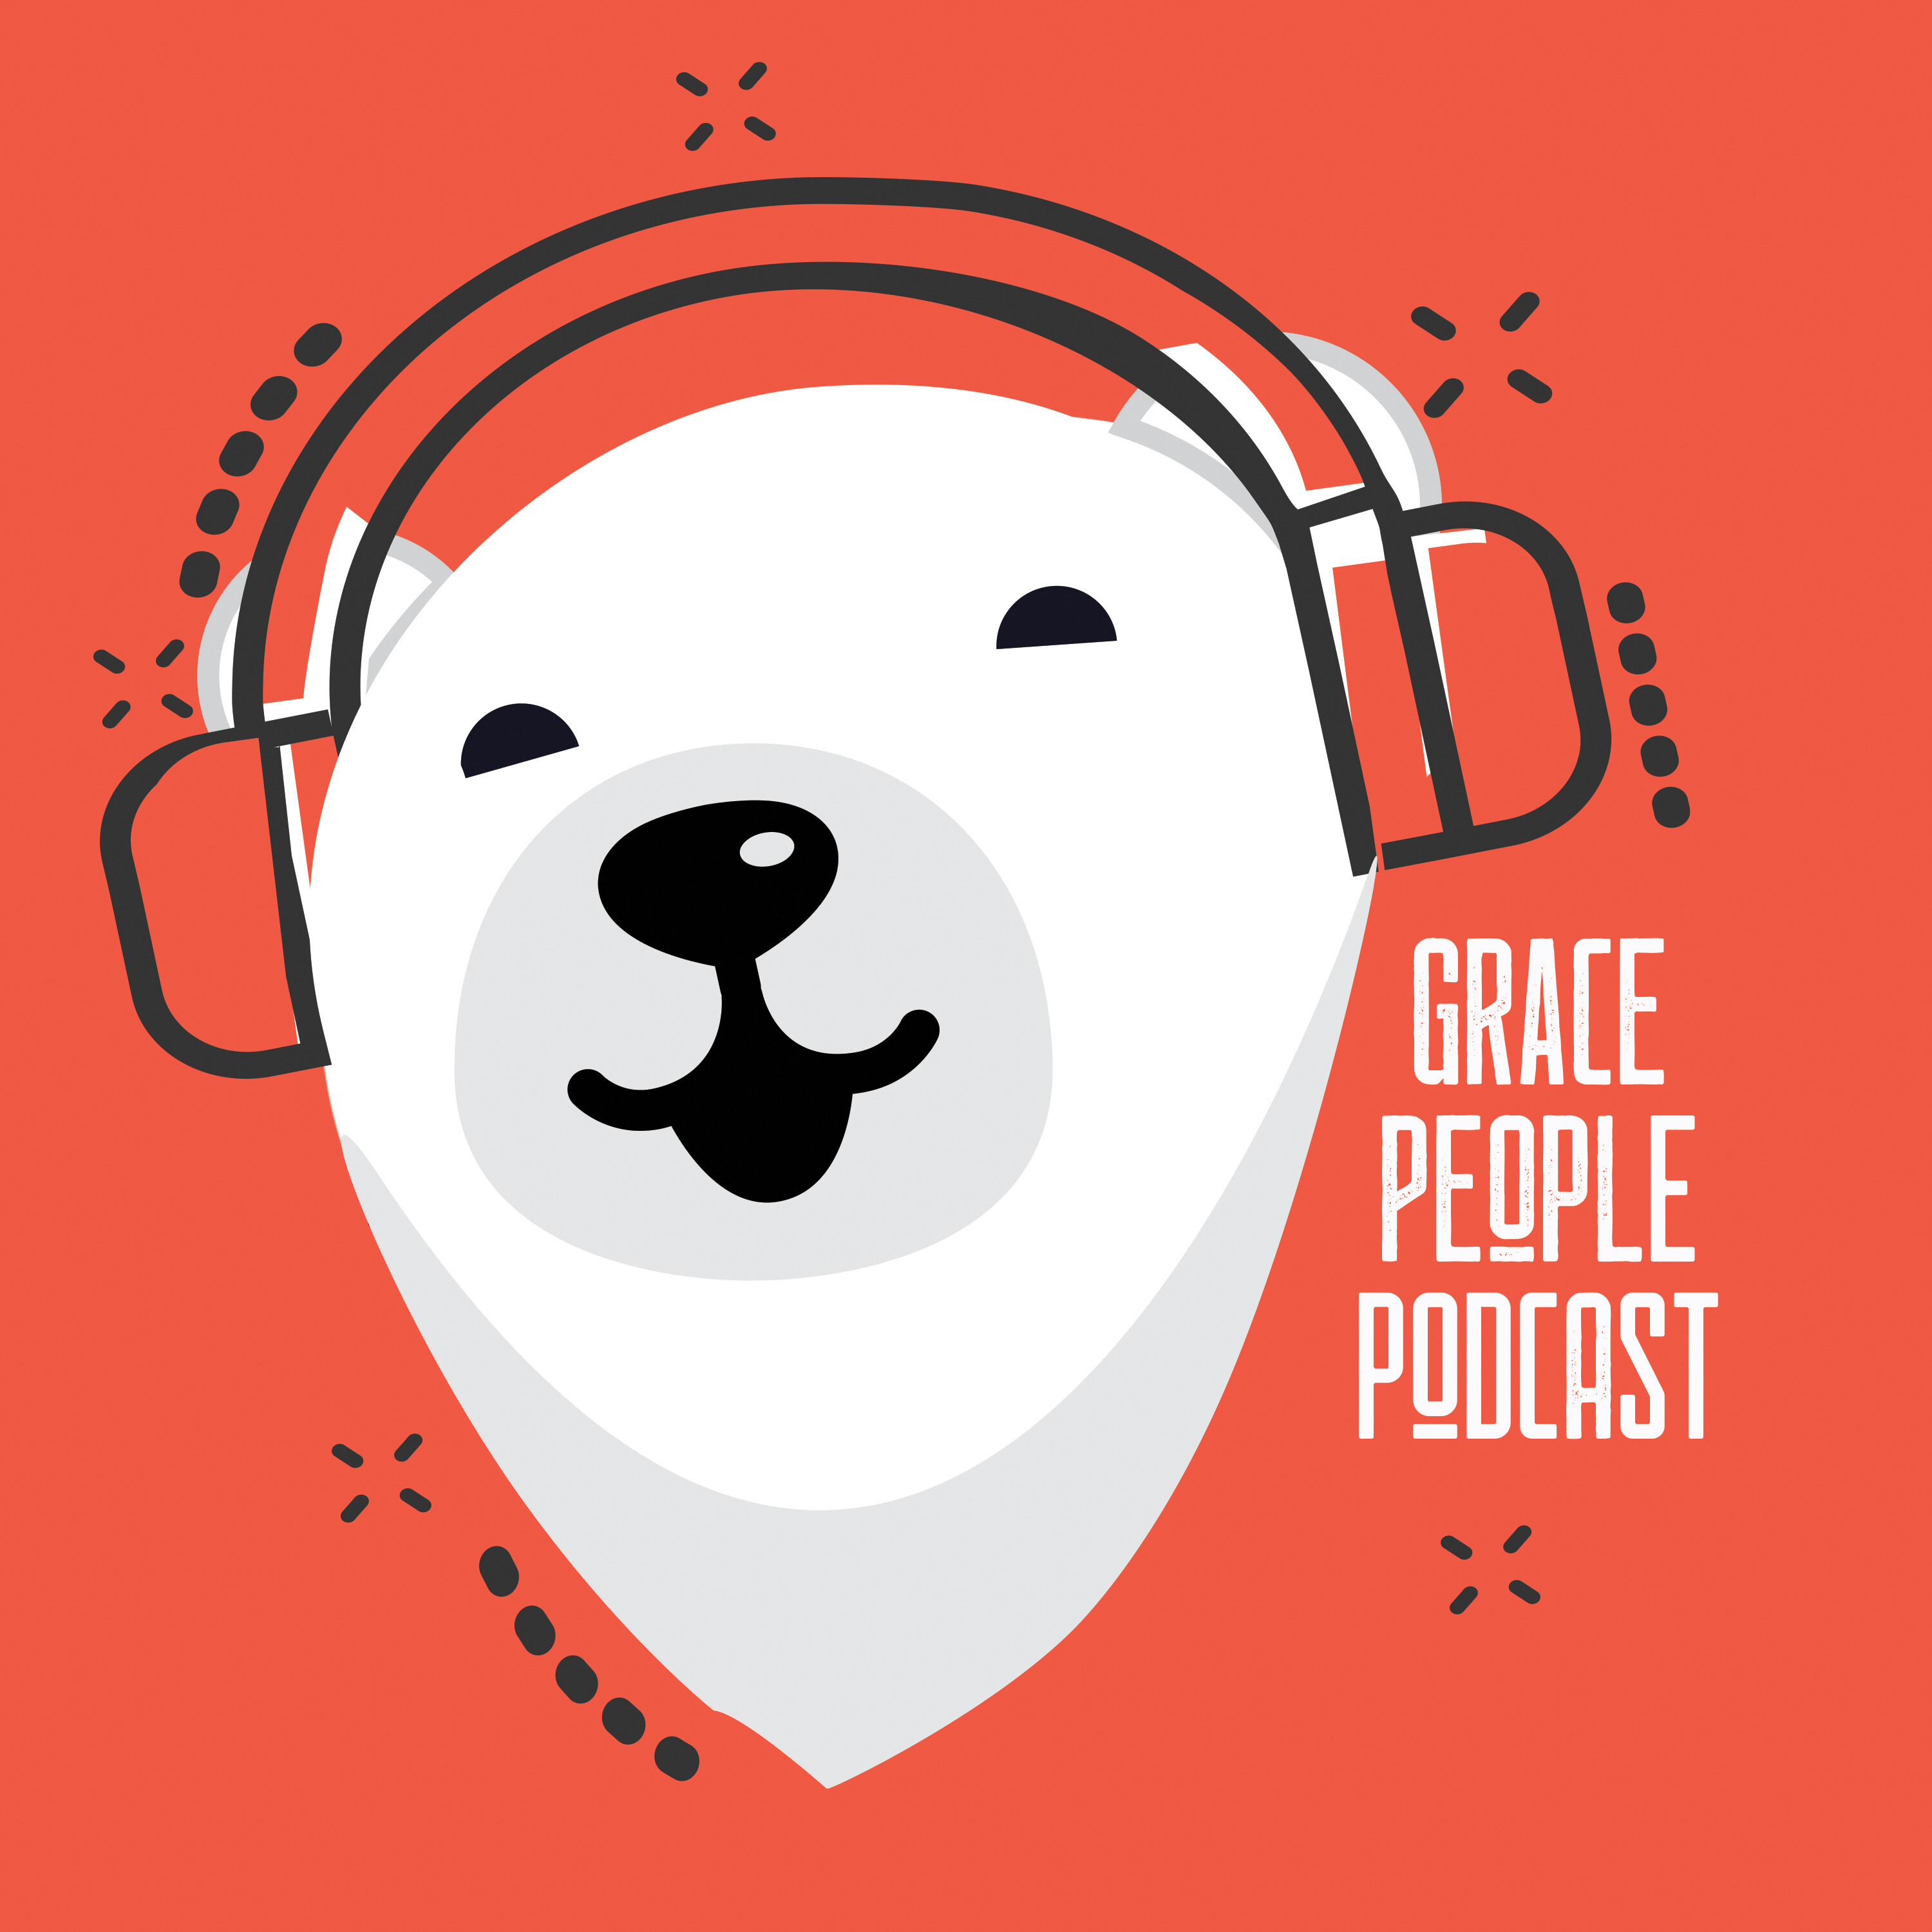 Grace People Podcast